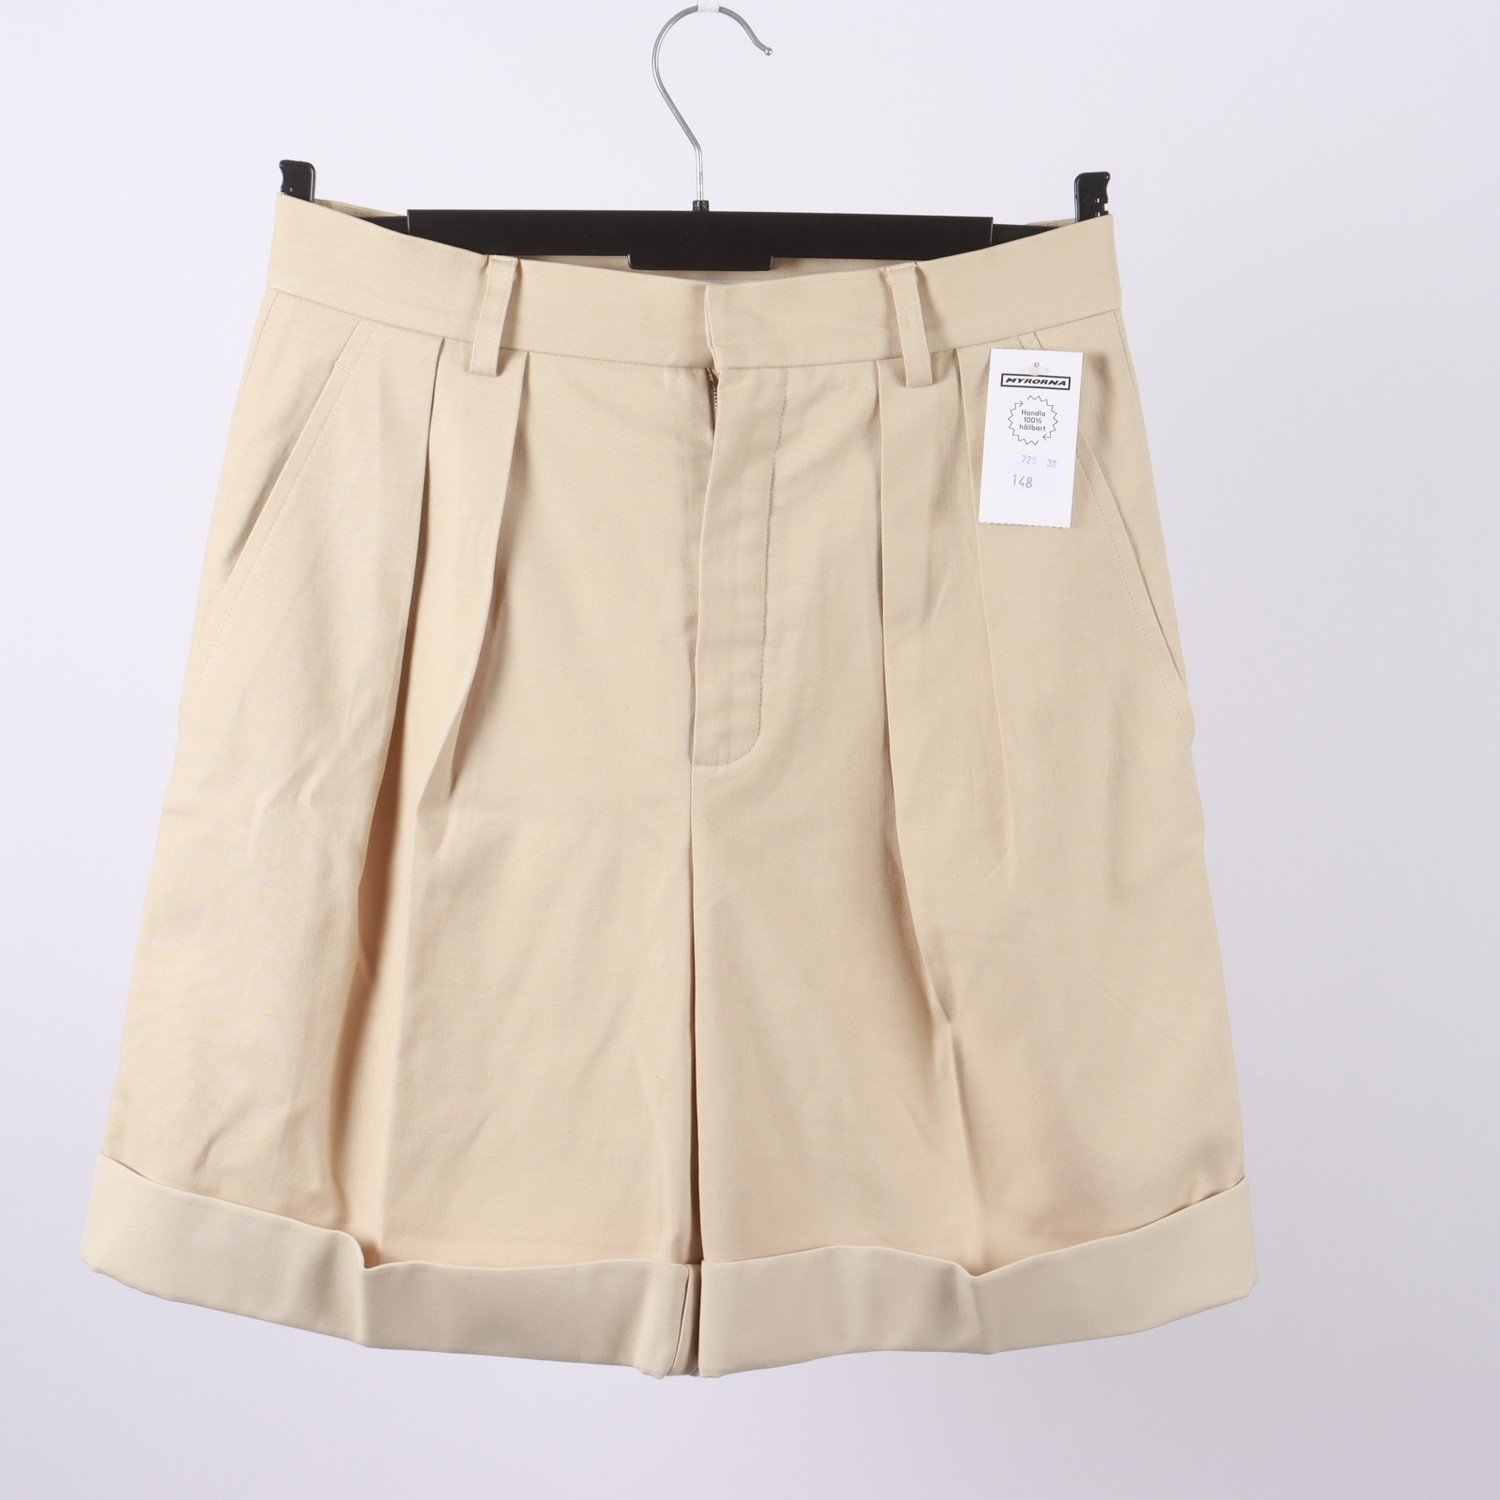 Shorts, Chloè, beige, stl. 38